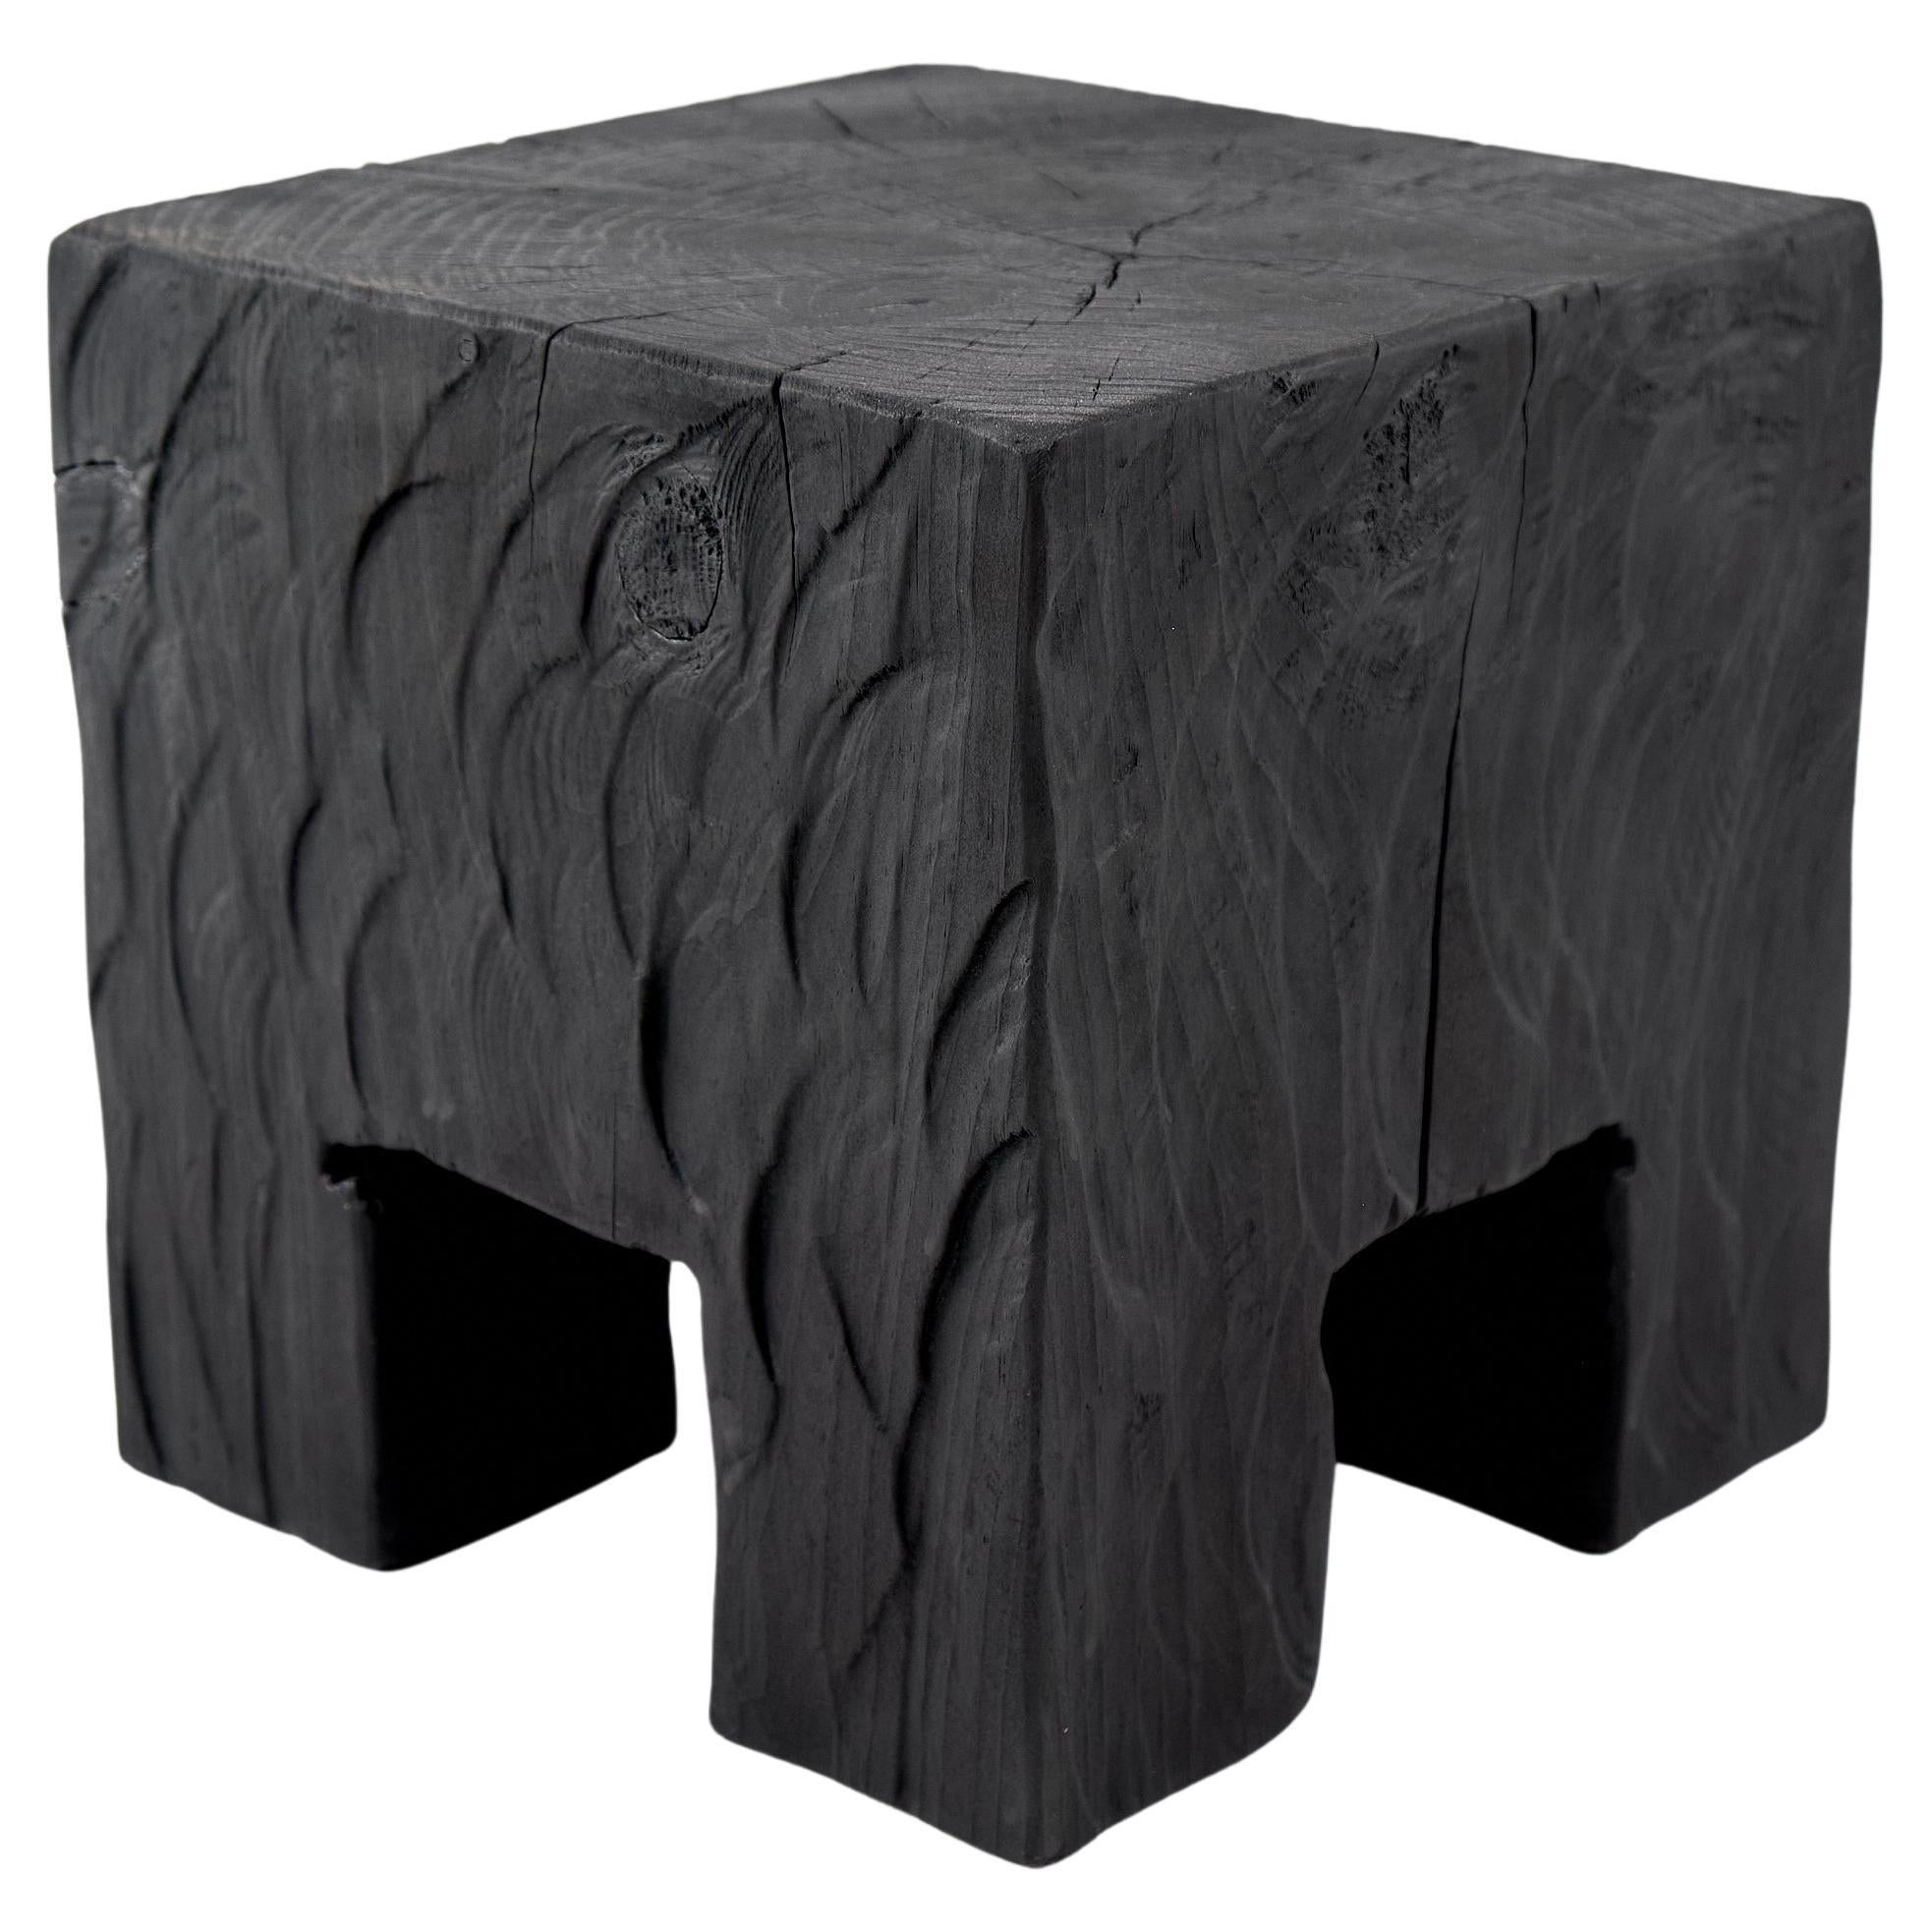 Solid Burnt Wood, Side Table, Stool, Wabi Sabi, Chainsaw Carved, Handmade For Sale